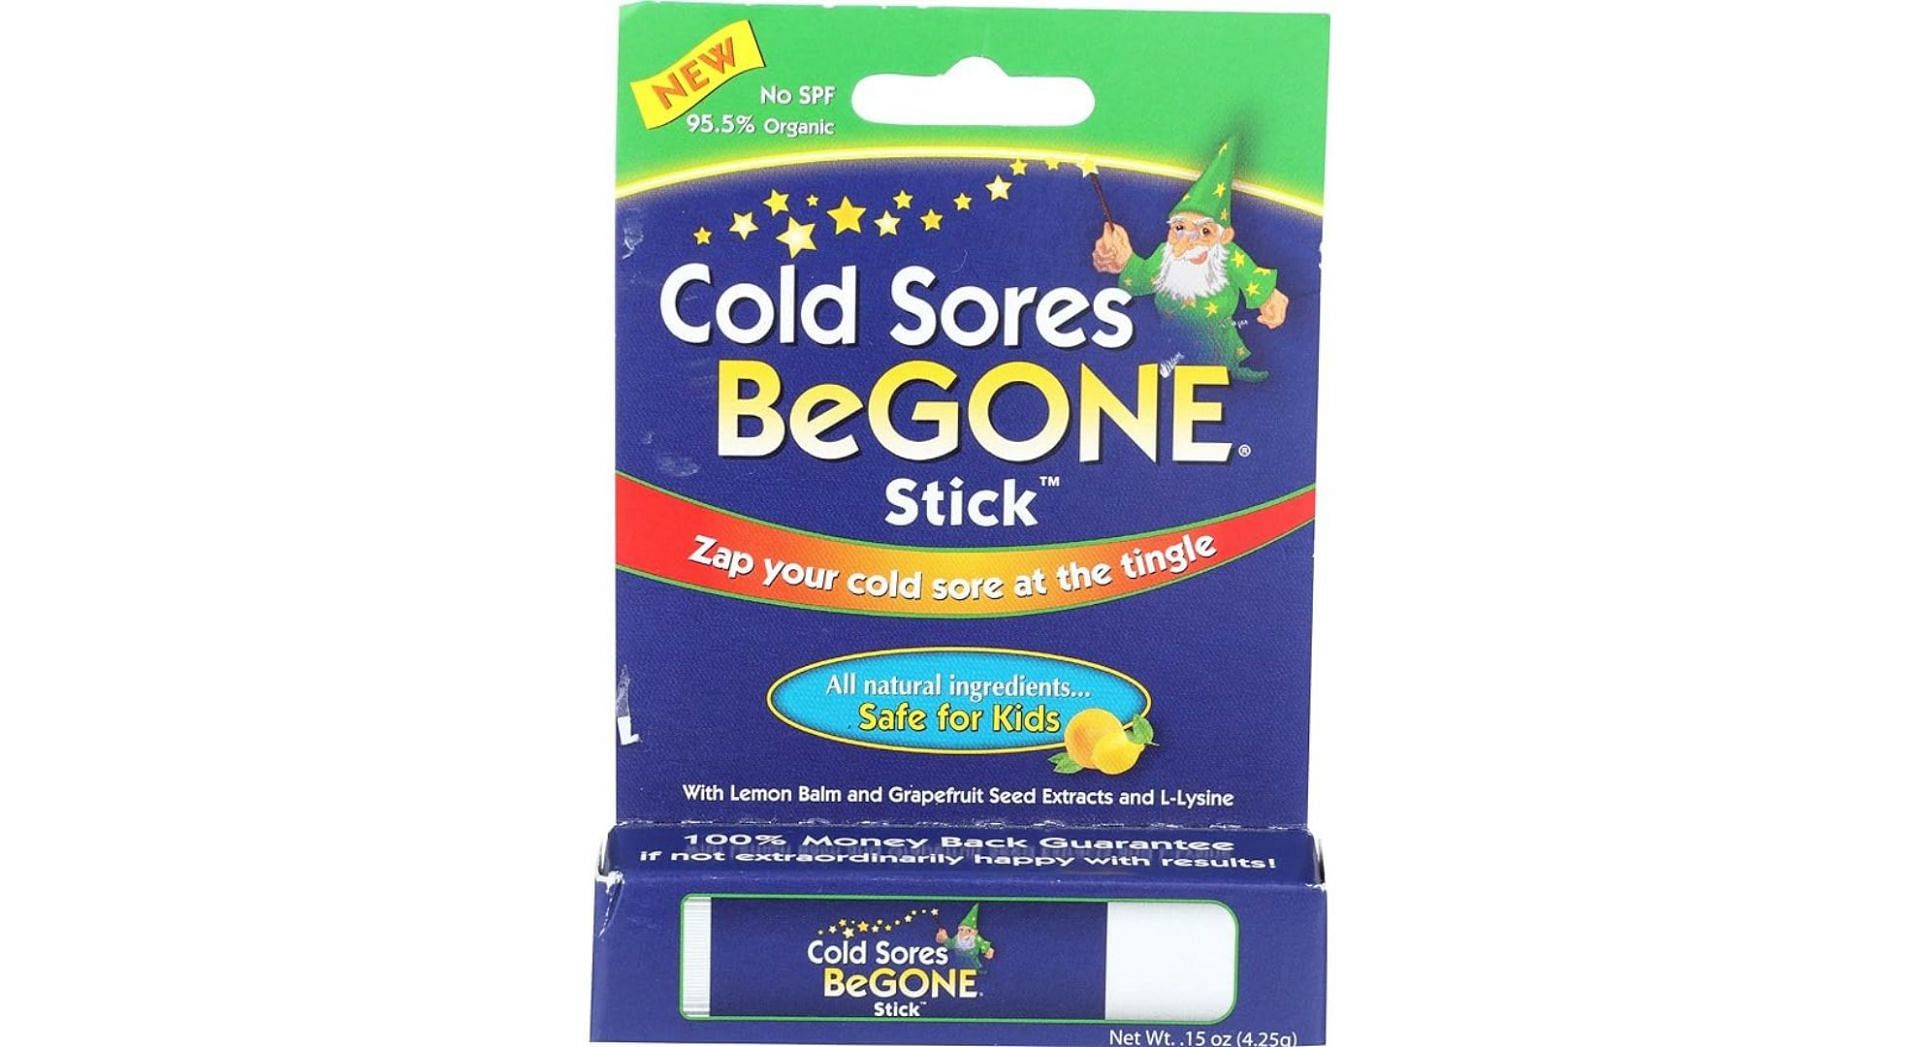 Cold Sores BeGone Stick (Image via Amazon)